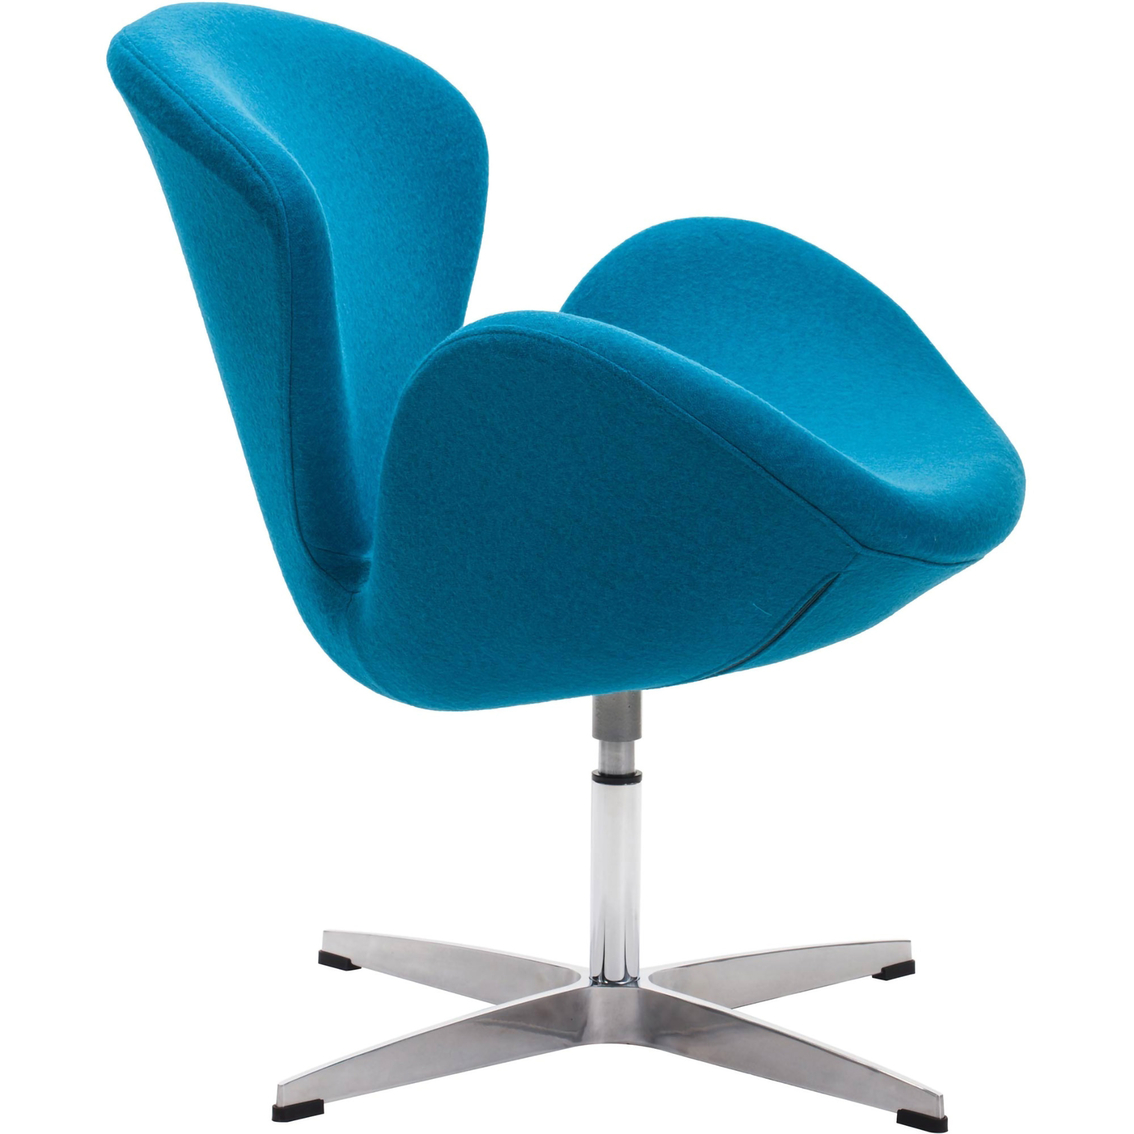 Zuo Pori Arm Chair - Image 2 of 4